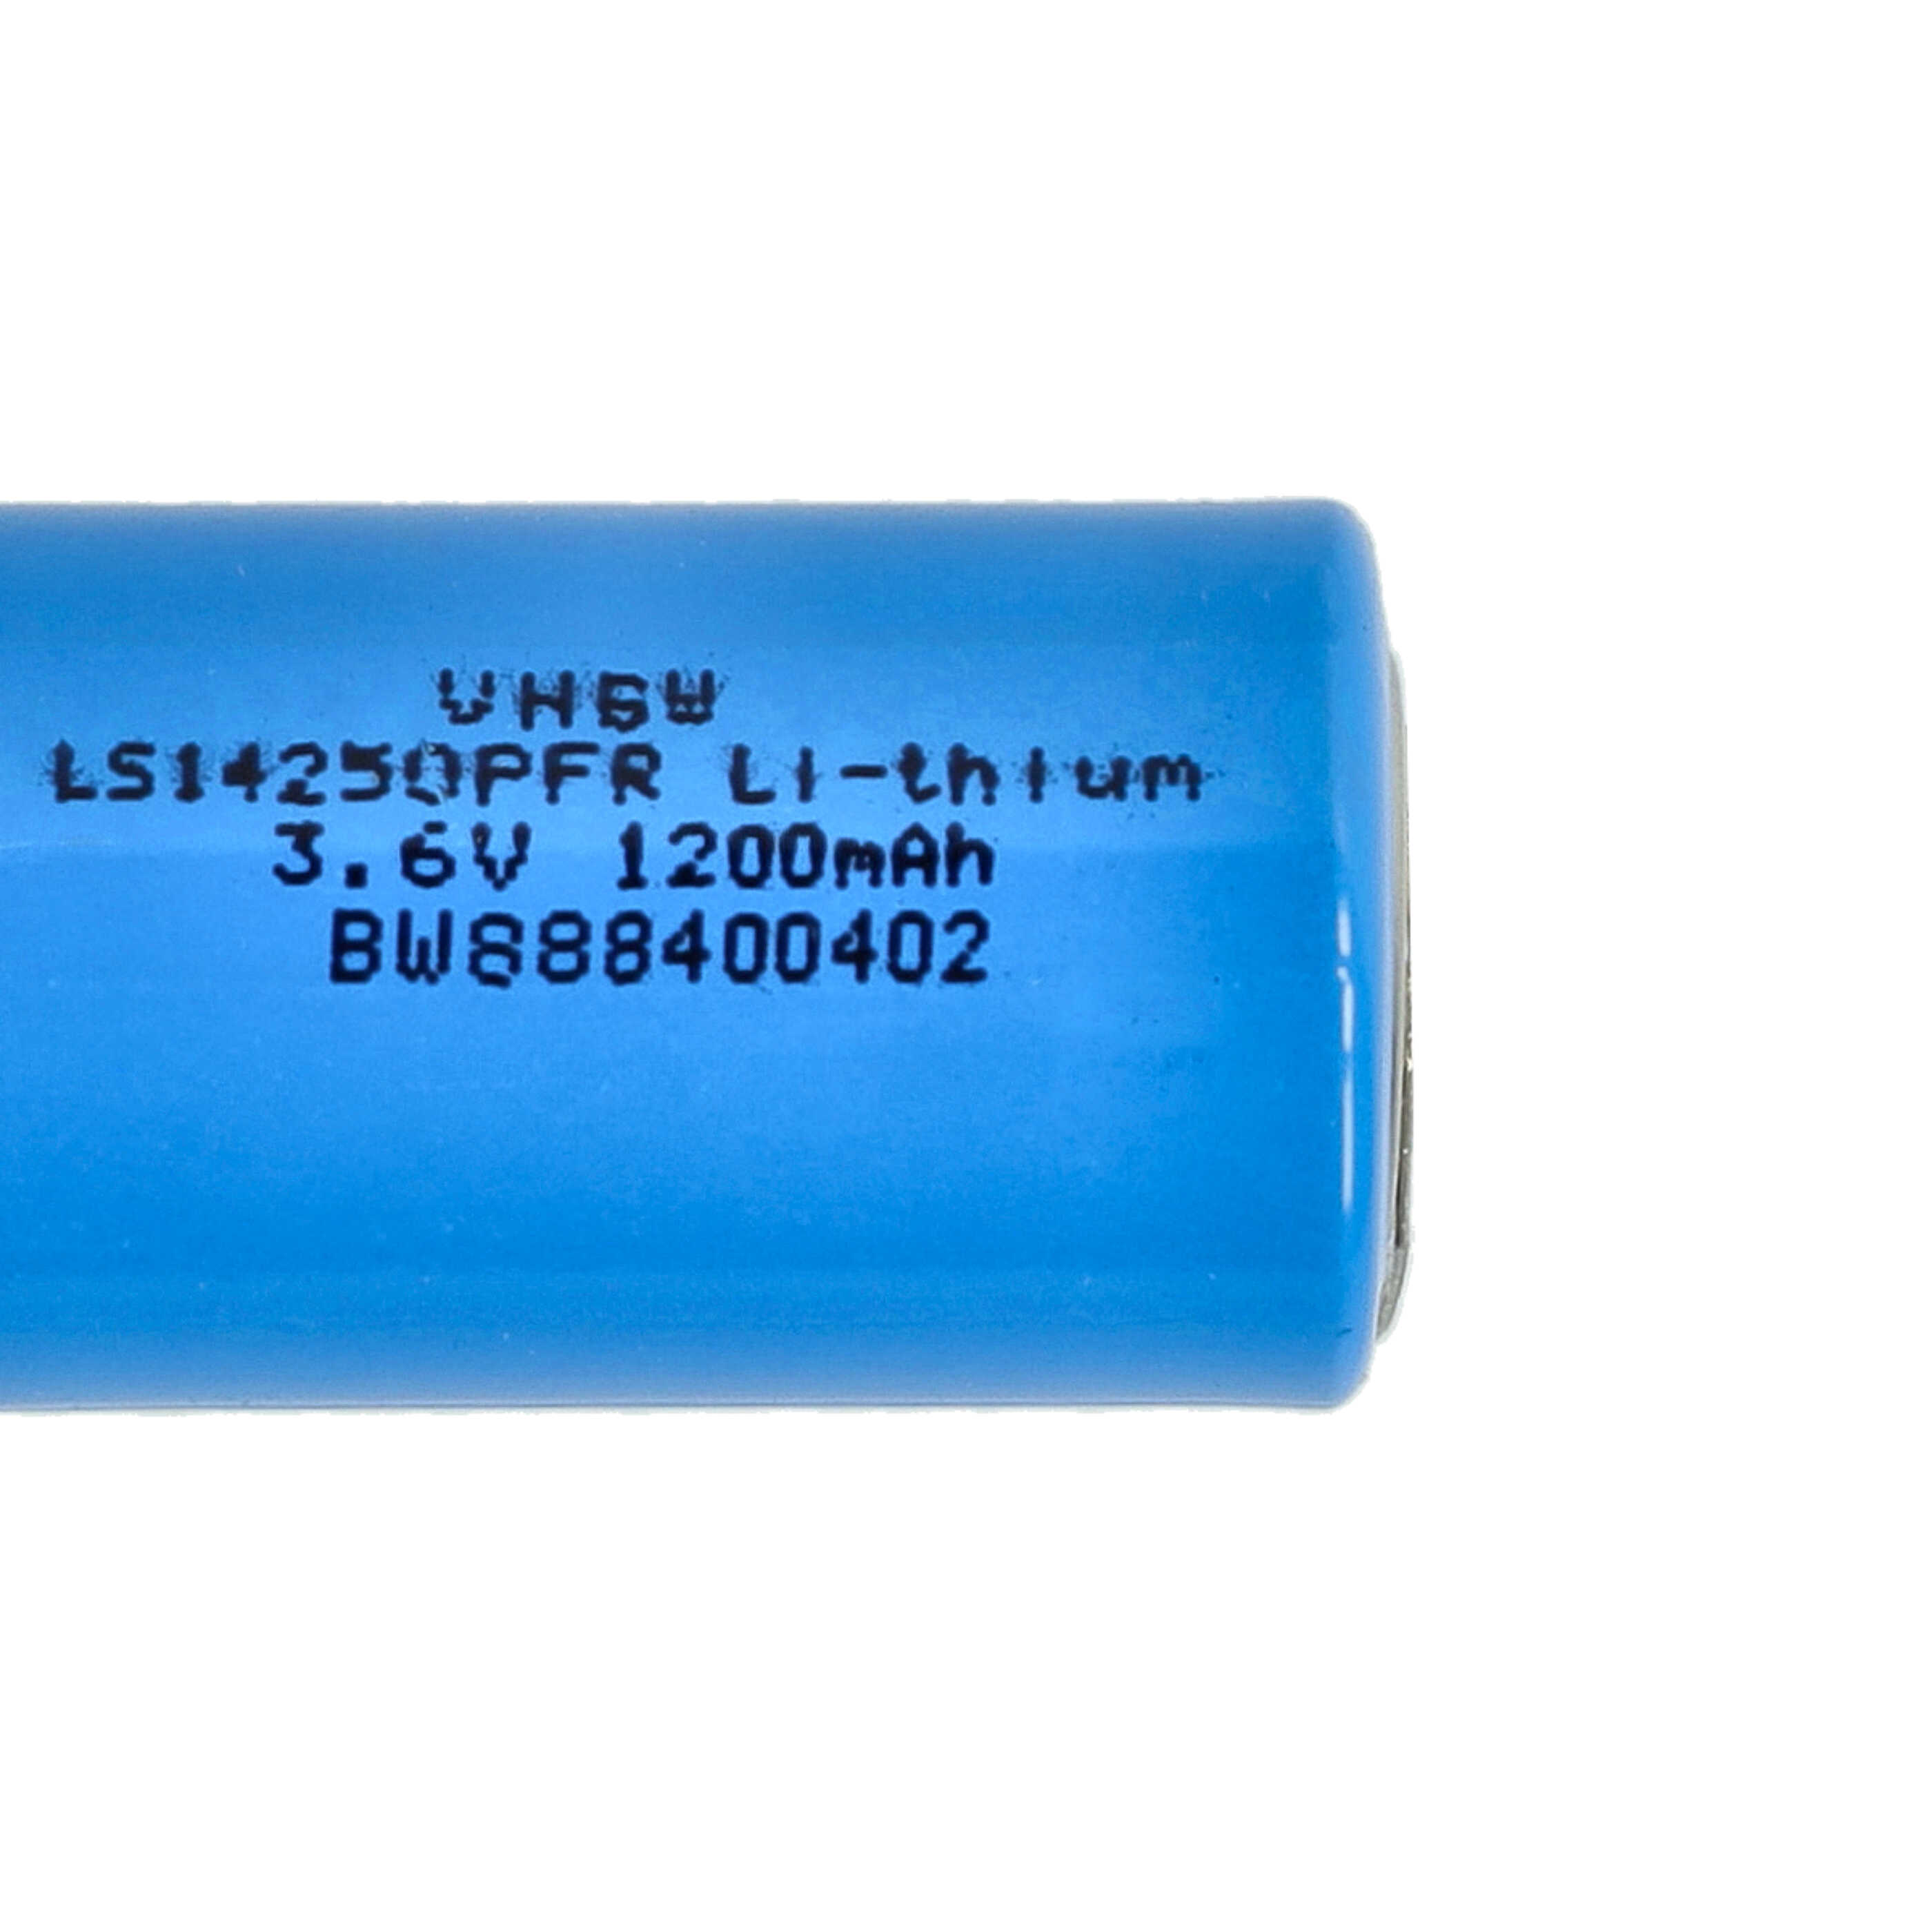 LS14250 Batterie als Ersatz für 1/2 AA LS14250PFR - 1200mAh 3,6V Li-SOCl2, mit Lötanschlüssen